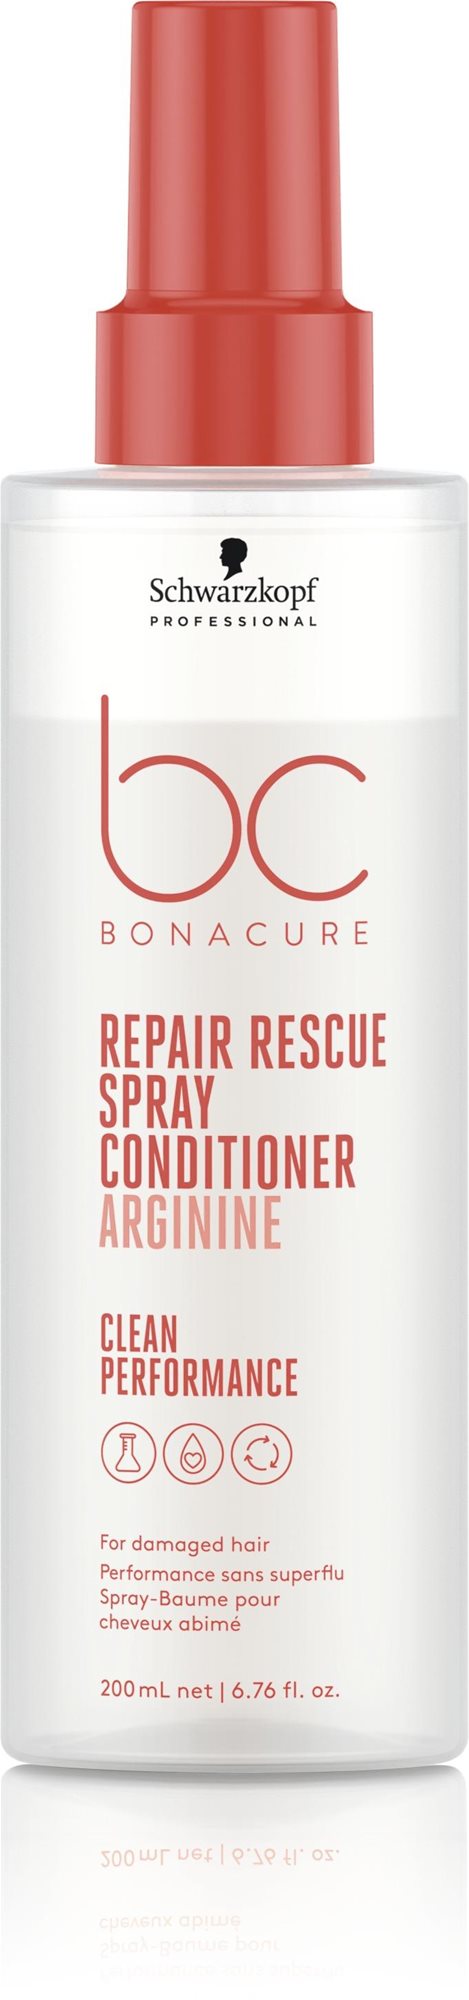 SCHWARZKOPF Professional BC Bonacure Clean Balance Repair Rescue hajkondicionáló spray 200 ml